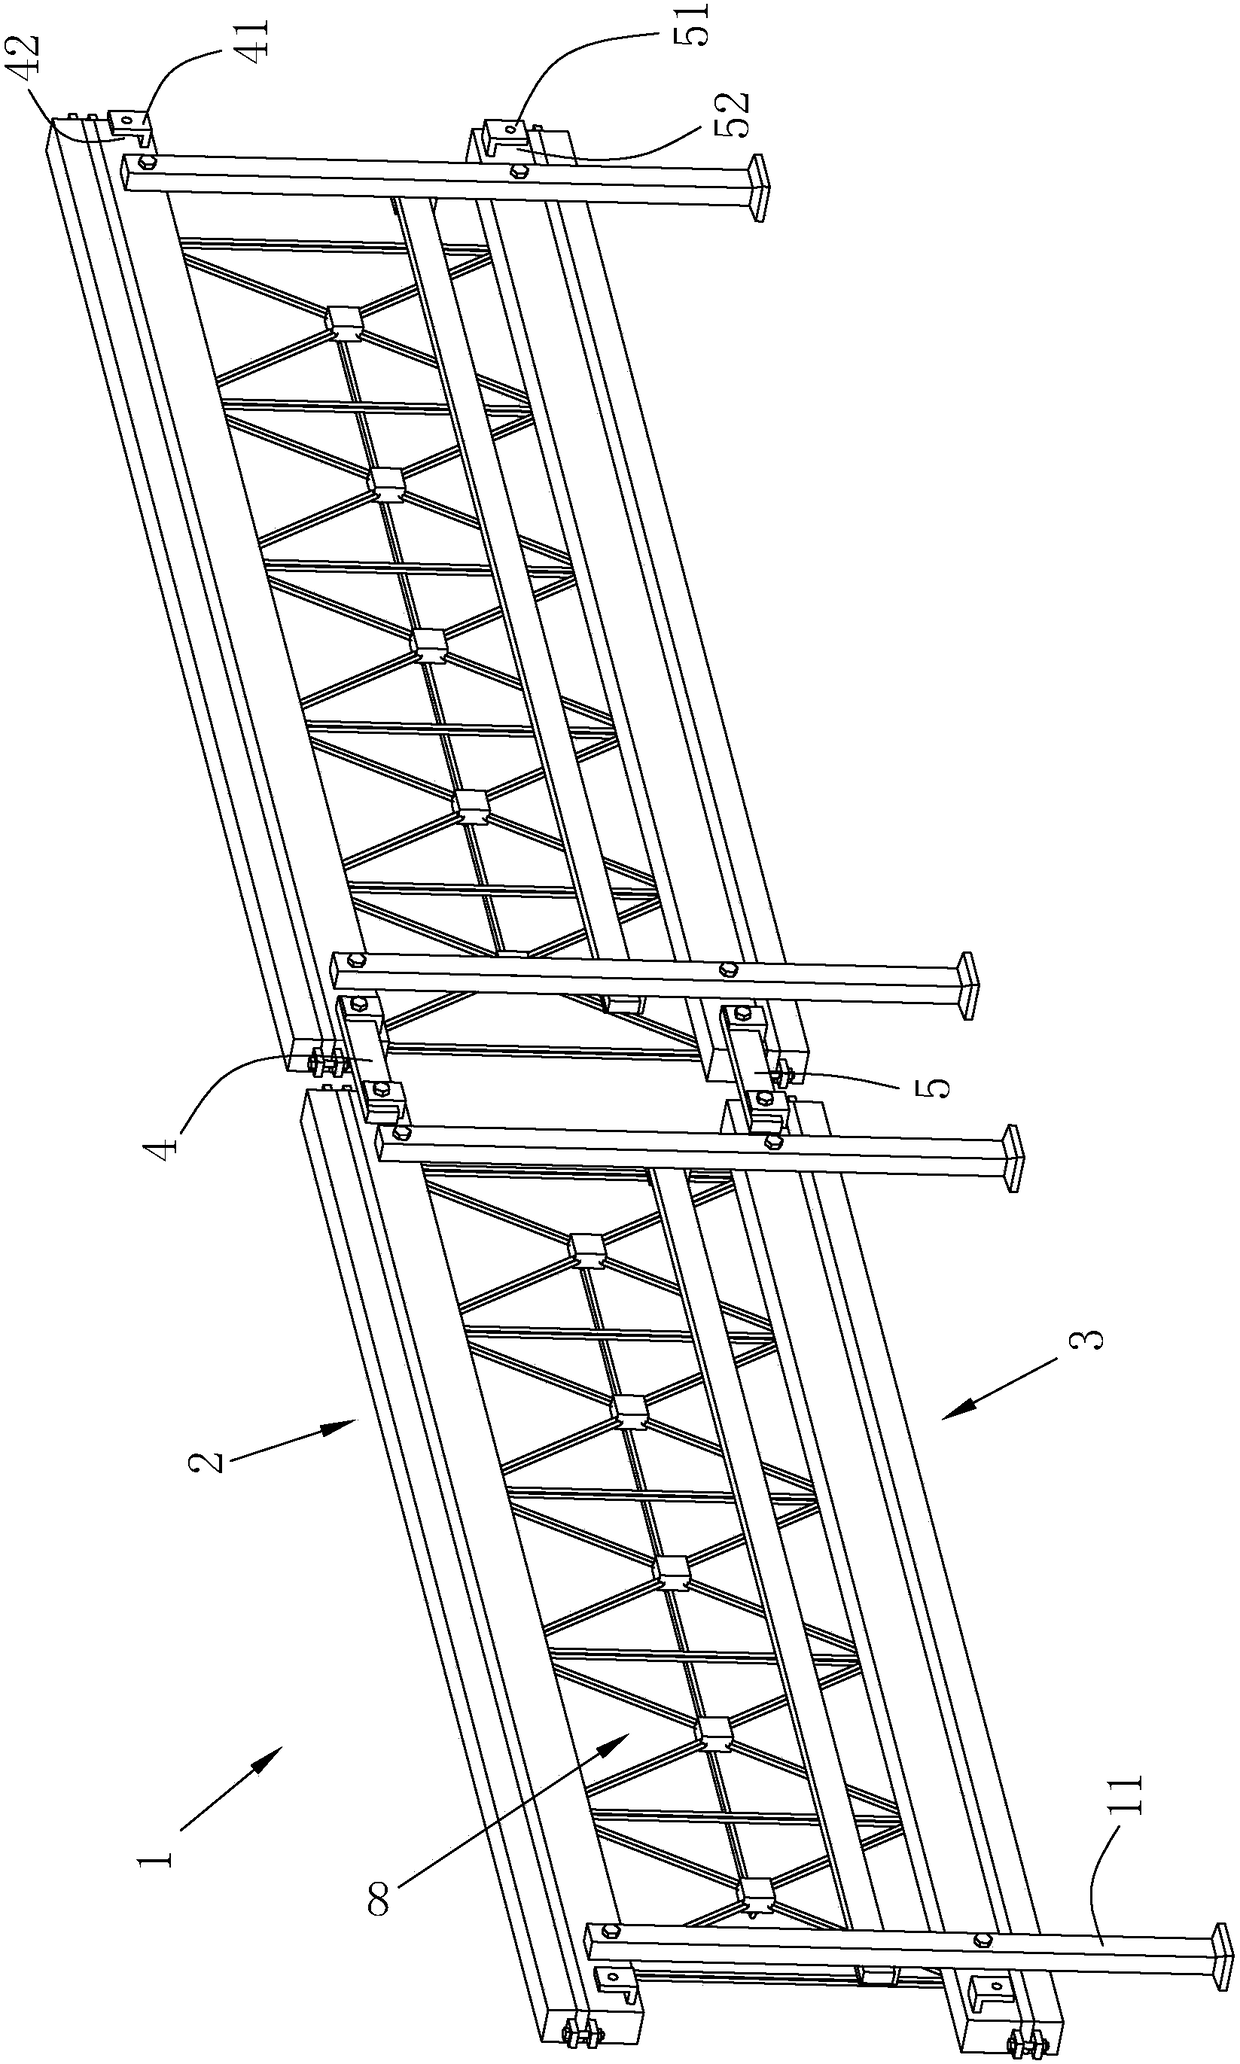 Prefabricated guardrail